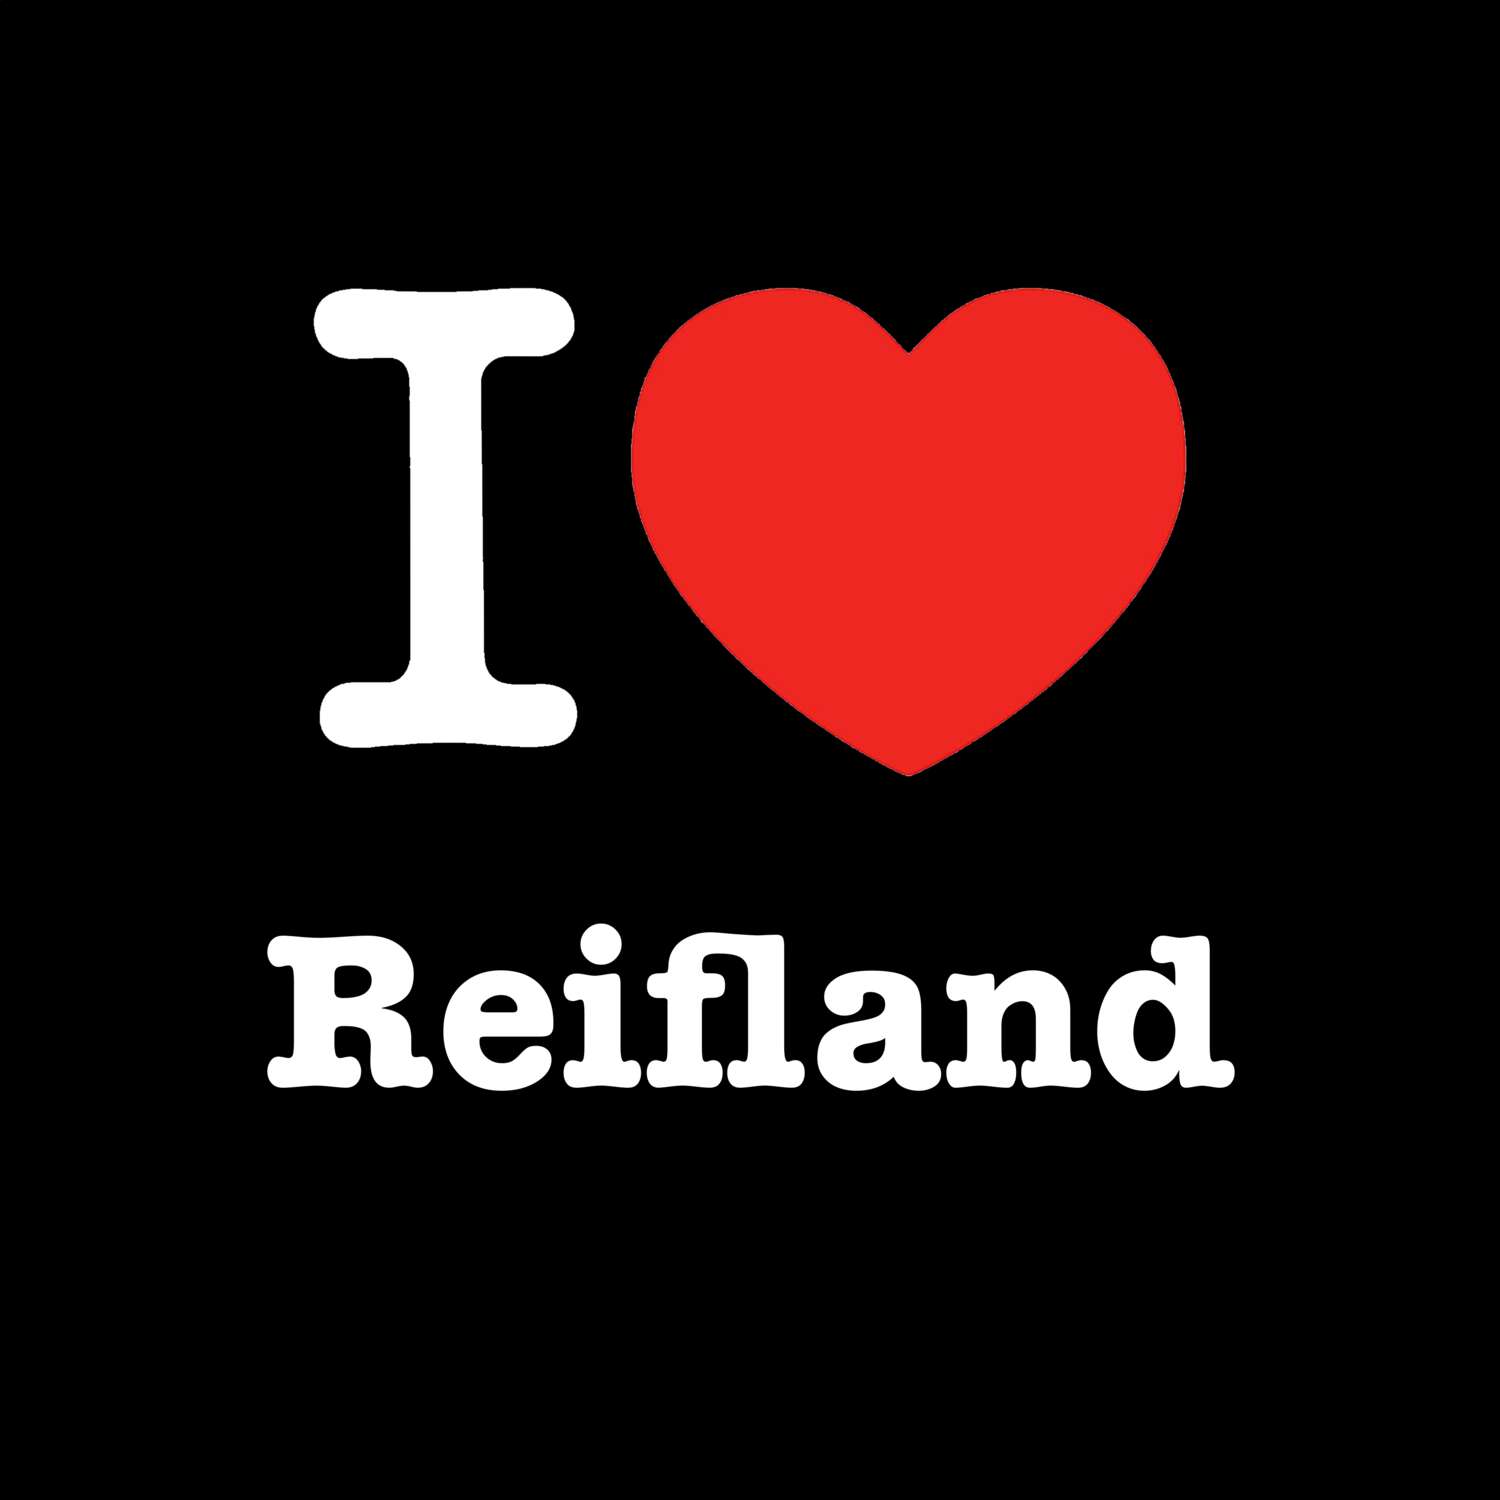 Reifland T-Shirt »I love«